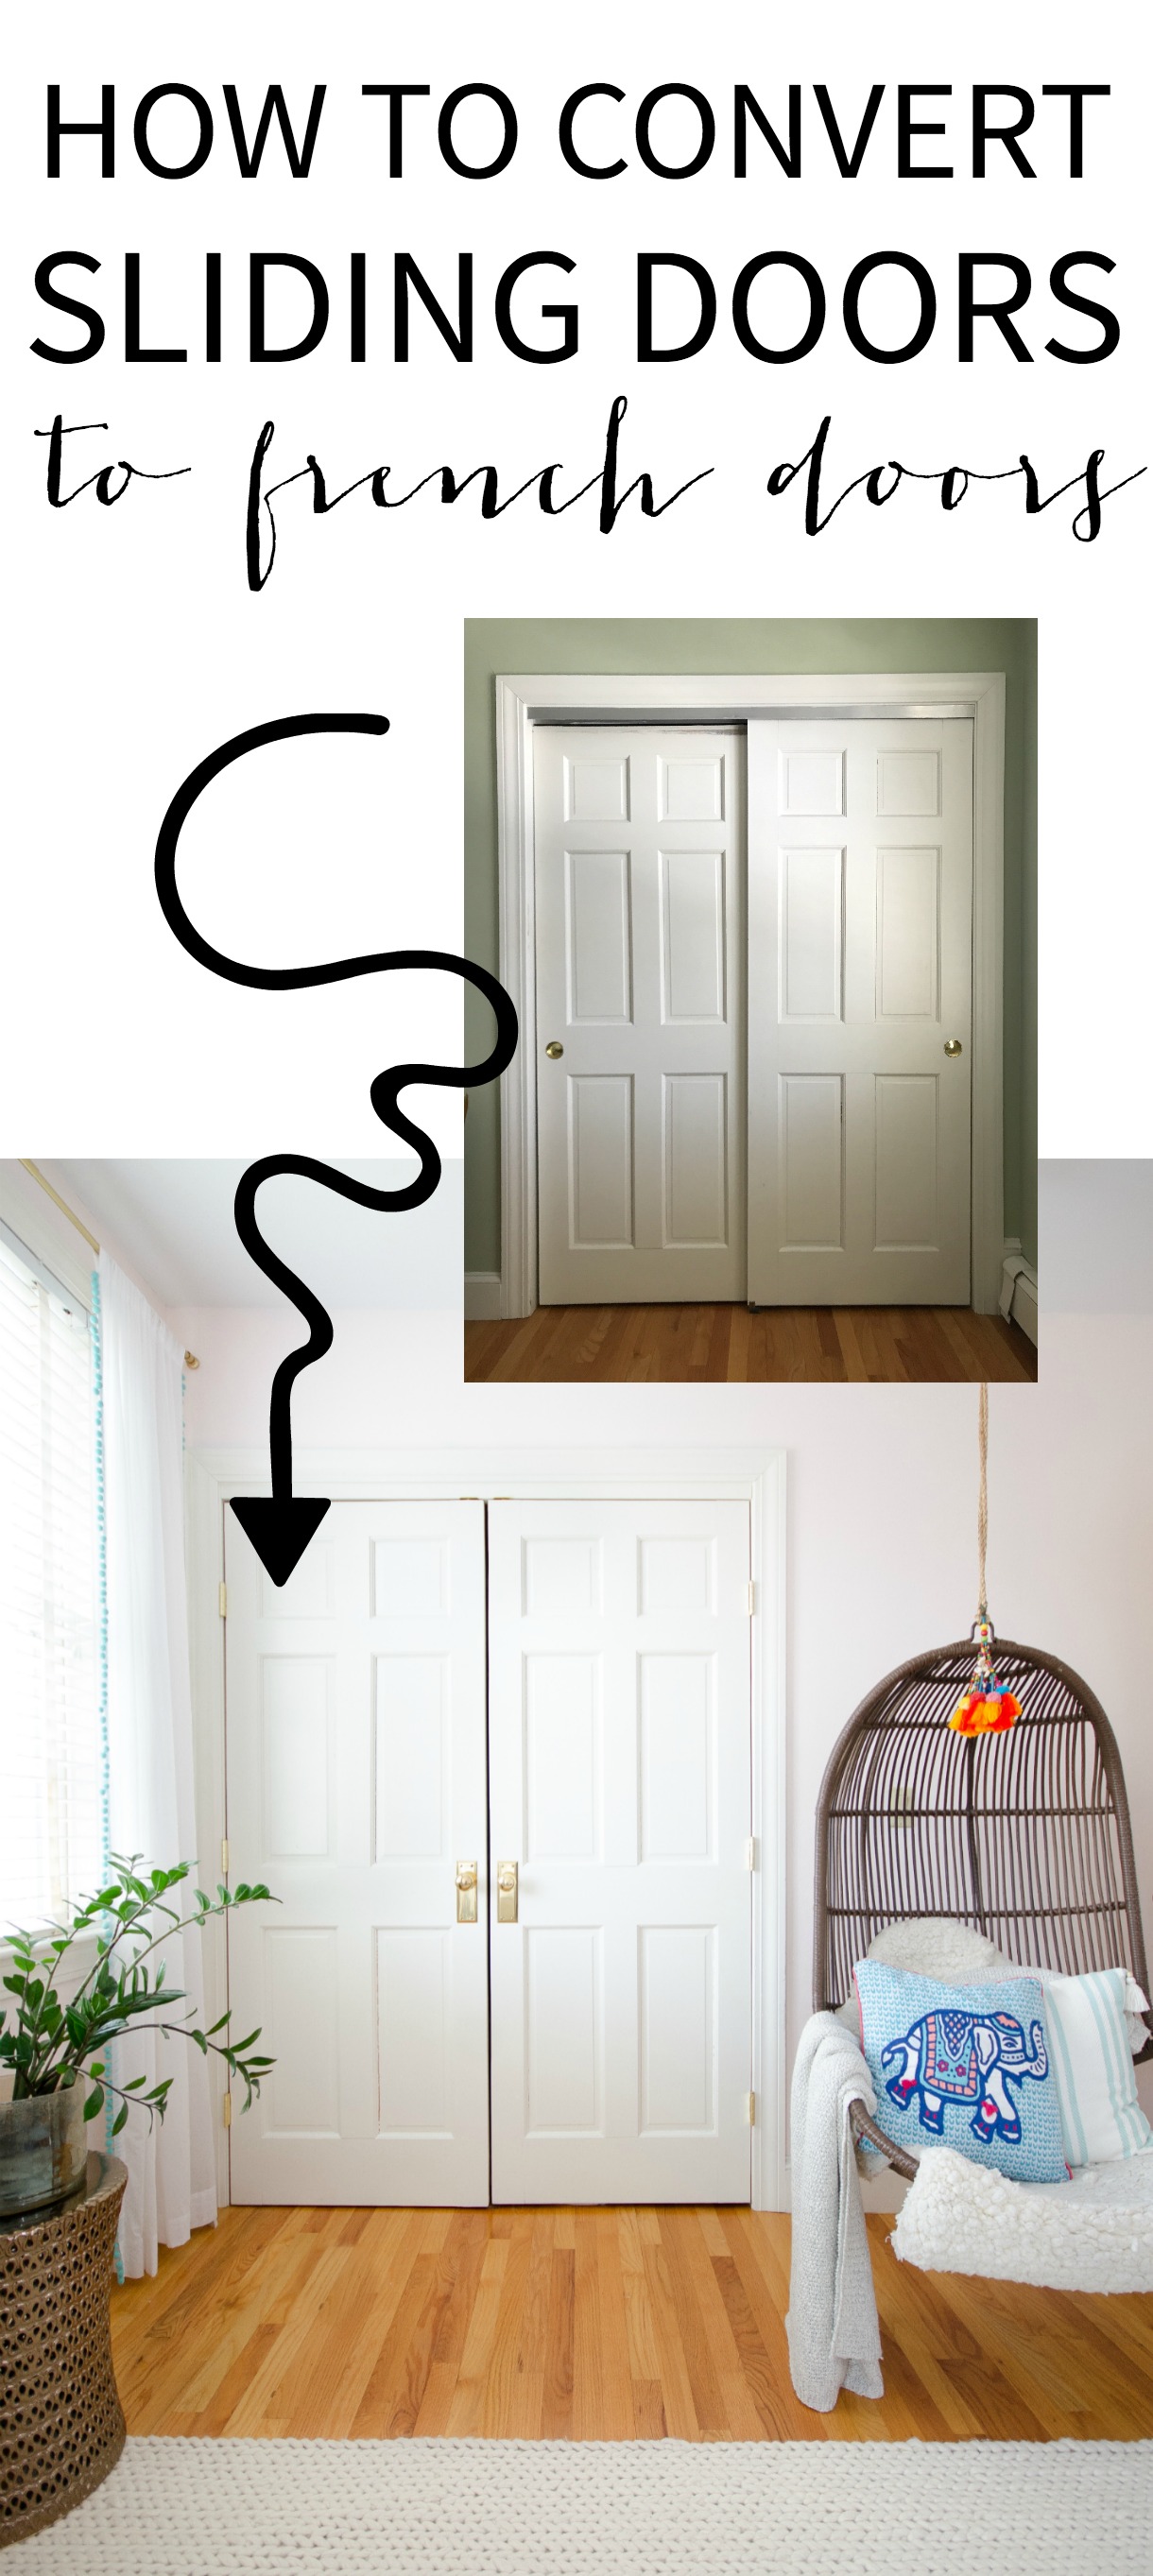 Convert Sliding Doors To Hinged, How To Remove Sliding Mirror Wardrobe Doors